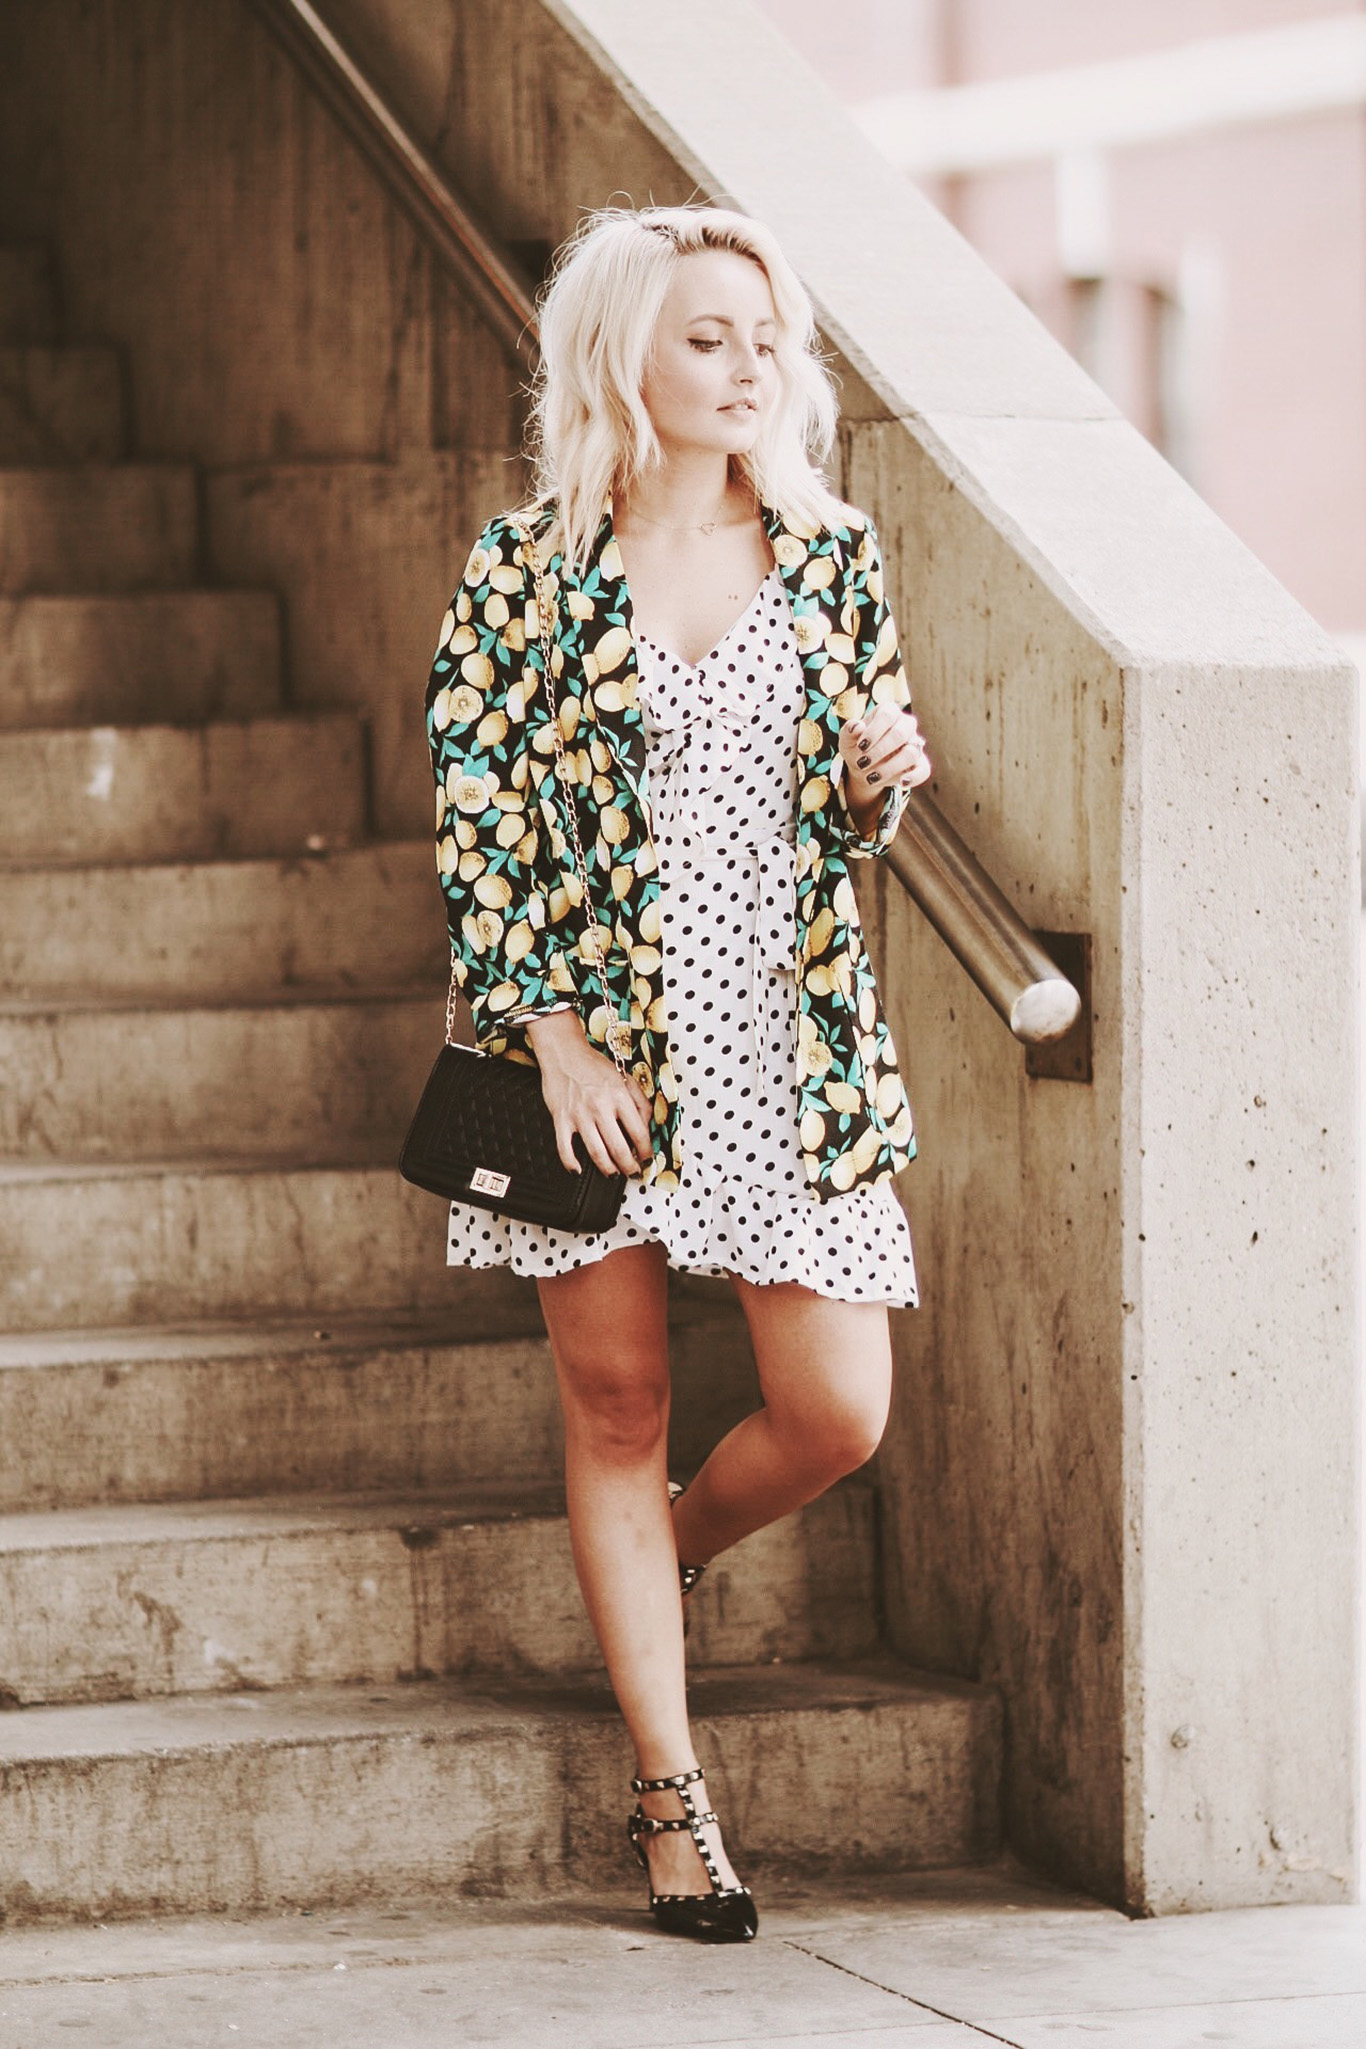 Alena Gidenko of modaprints.com styles her Summer polka dot dress with a lemon blazer for Fall